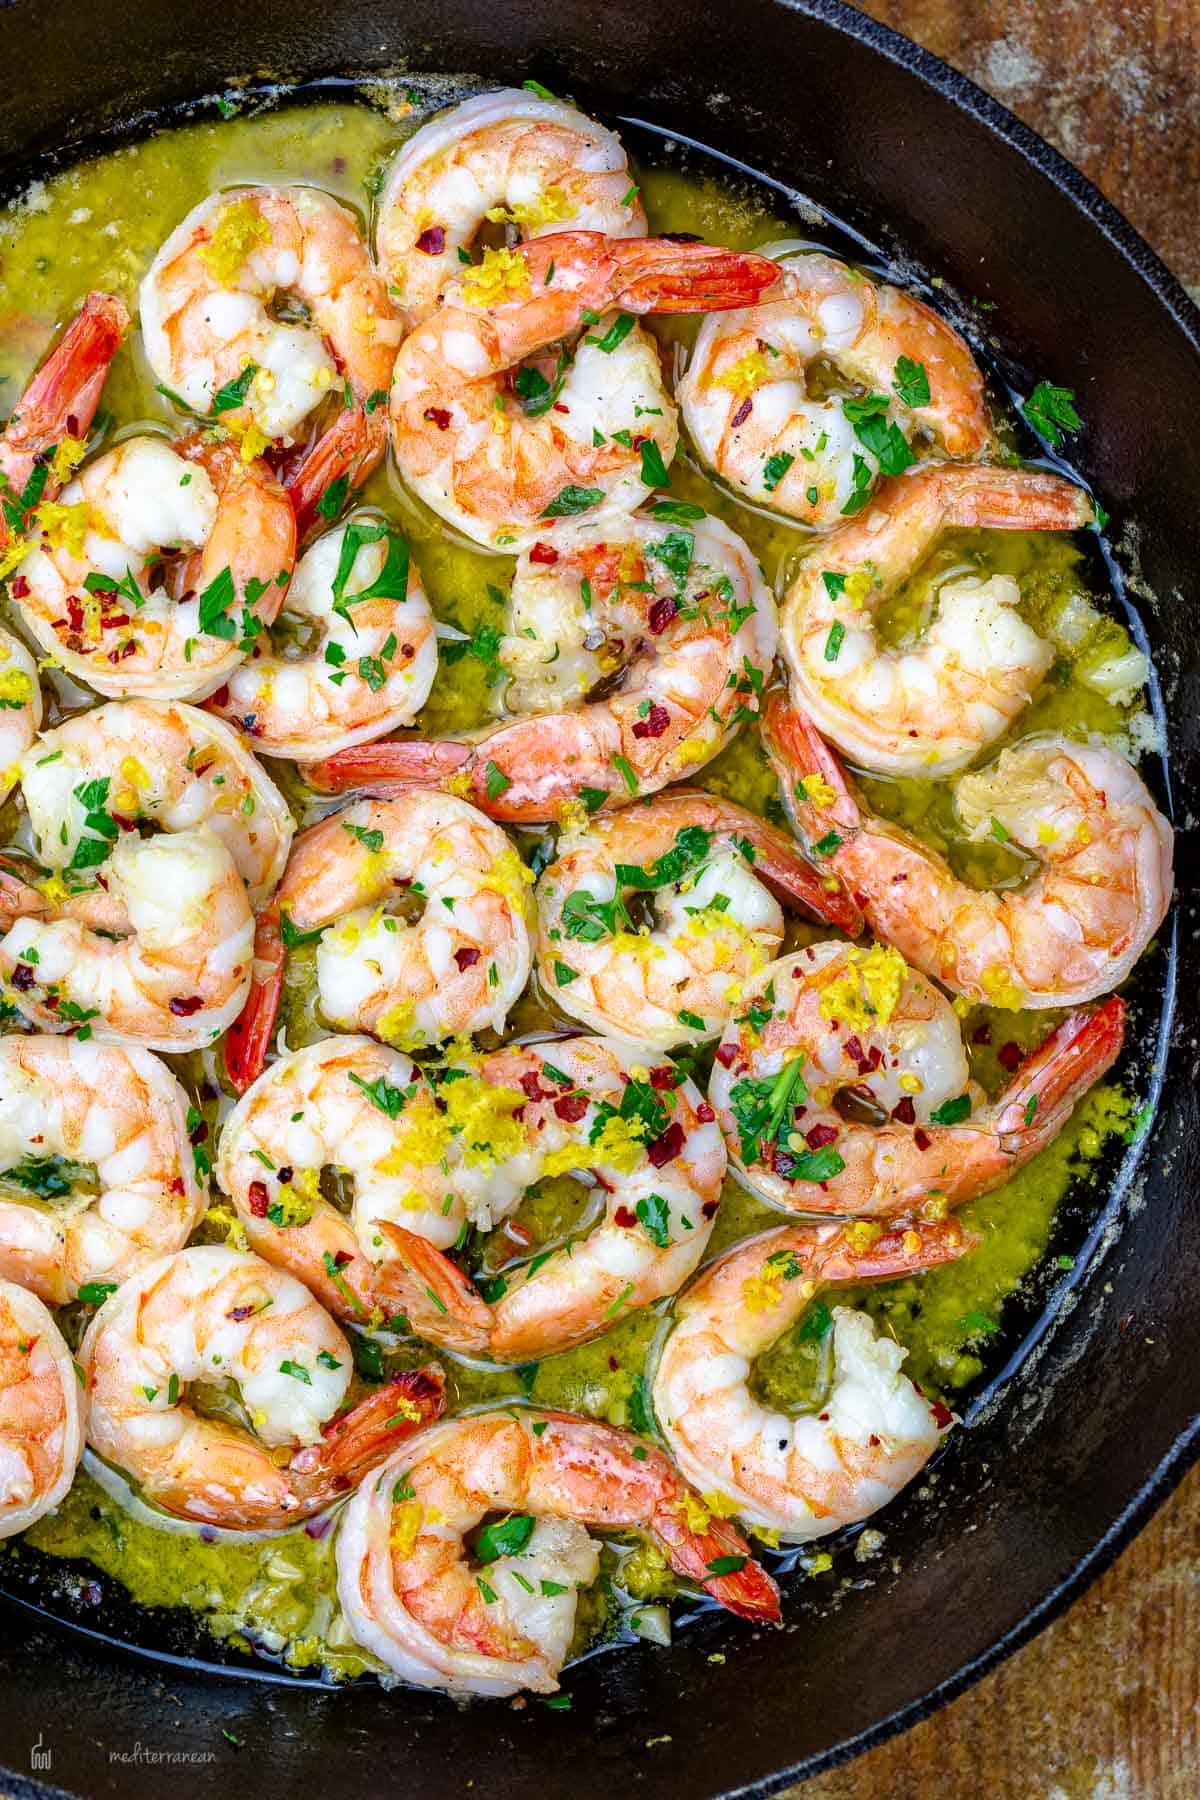 https://www.themediterraneandish.com/wp-content/uploads/2021/08/shrimp-scampi-recipe-5.jpg